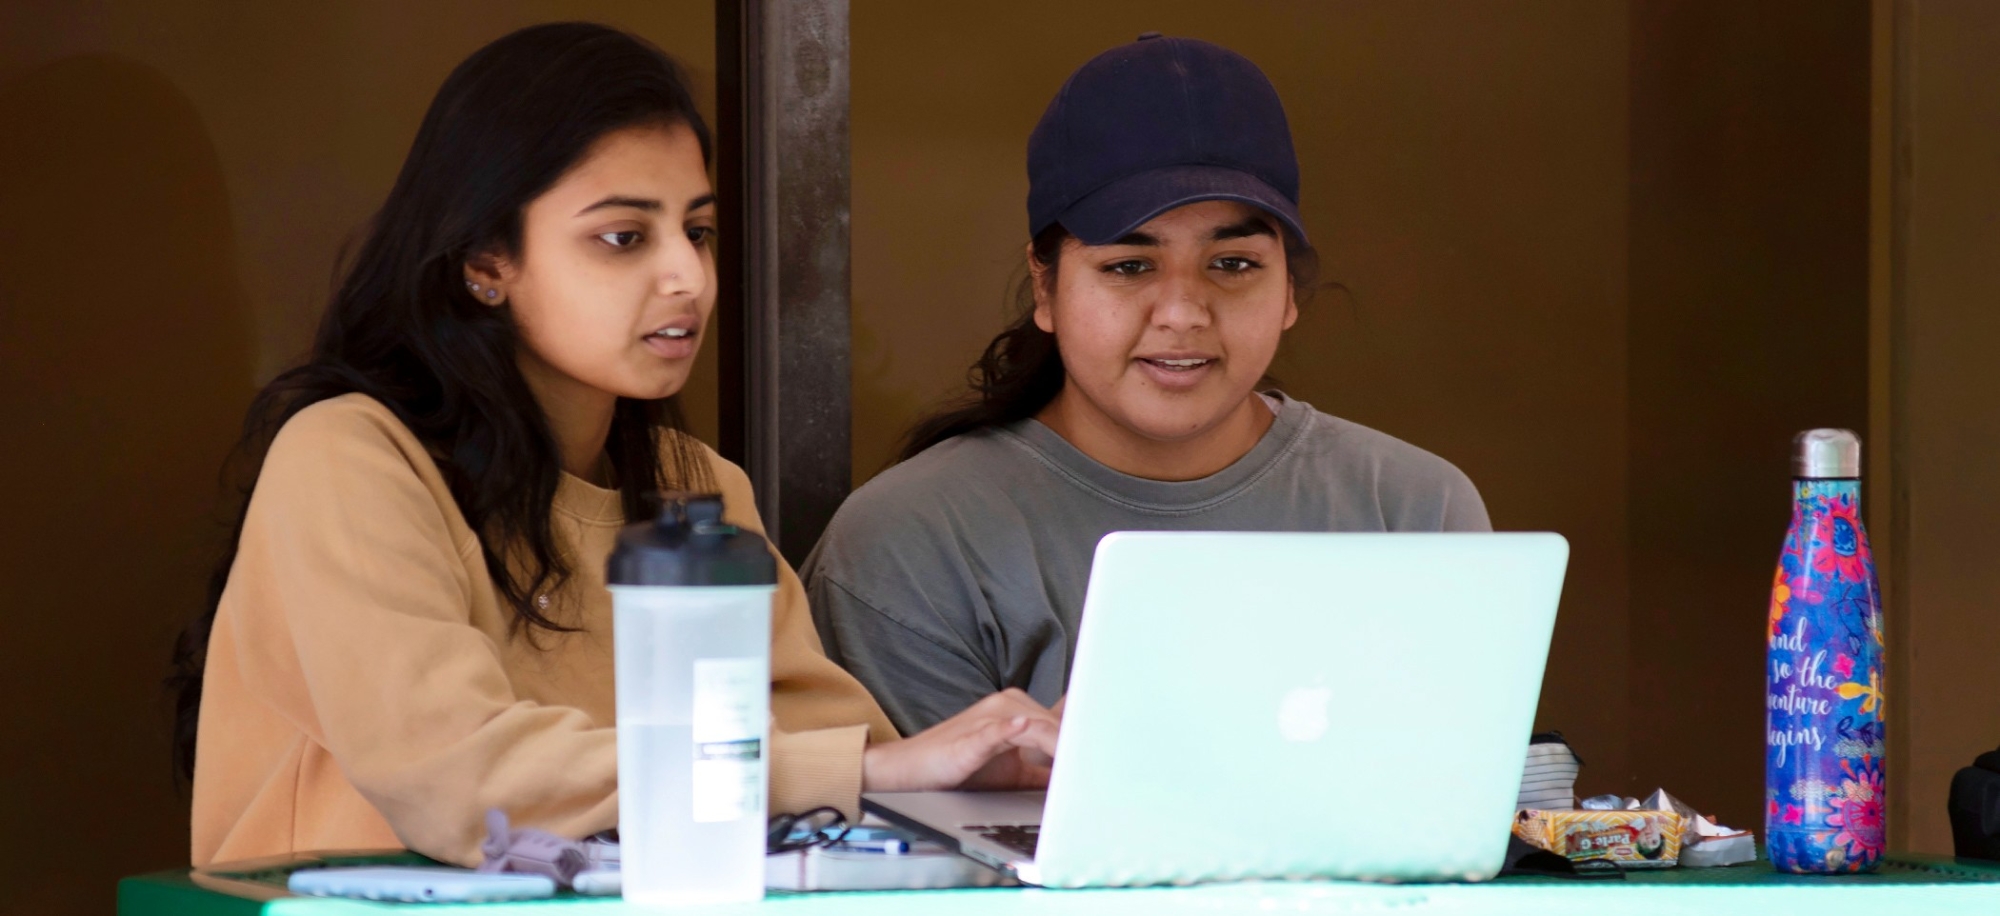 Students on laptop